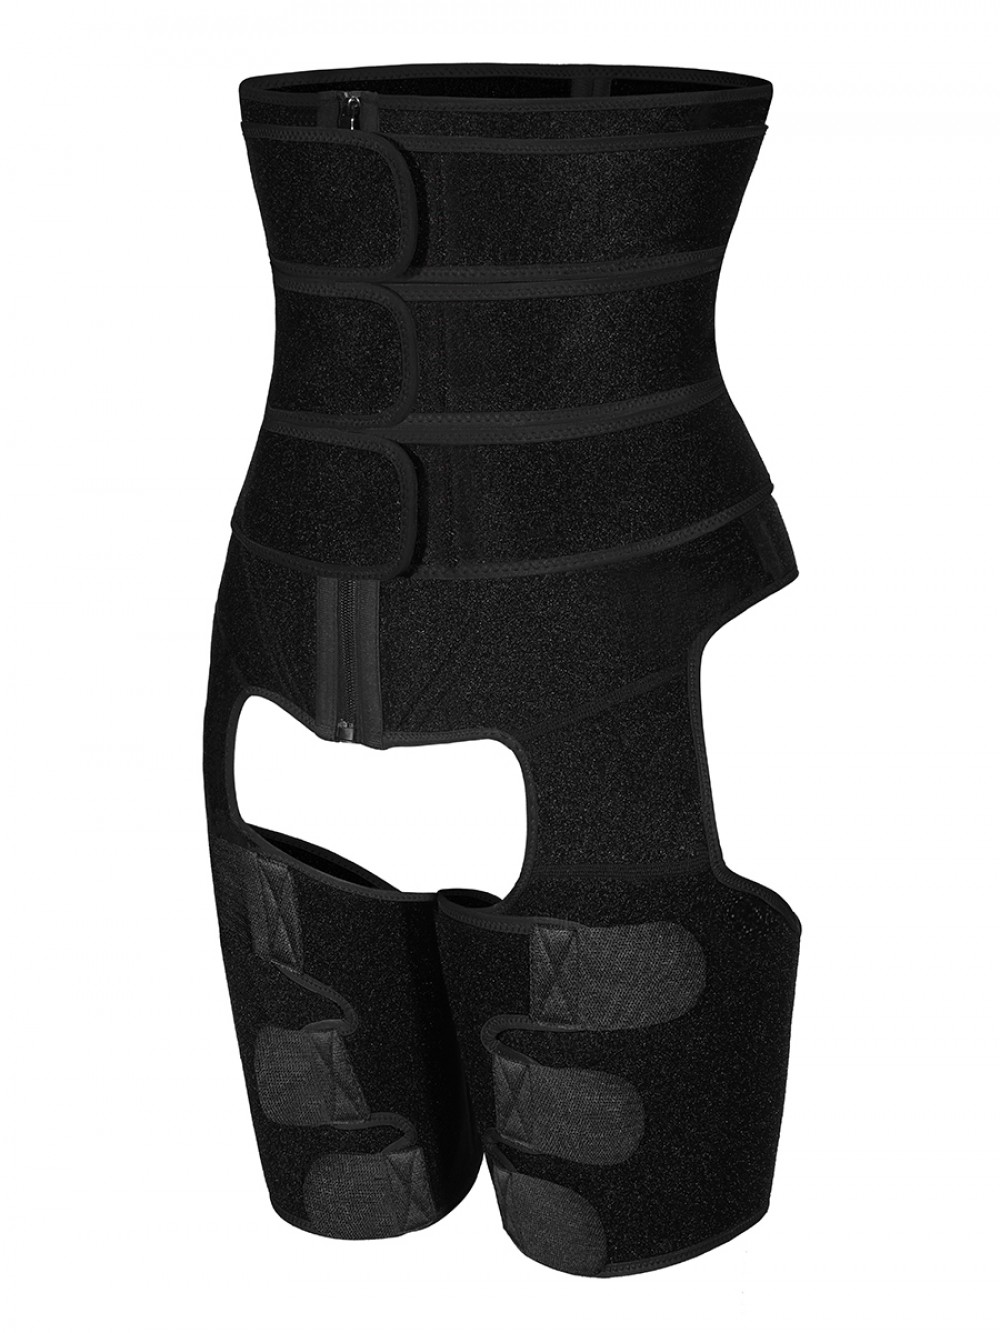 Black 3 Belts Tummy And Thigh Shaper Neoprene Waist Control